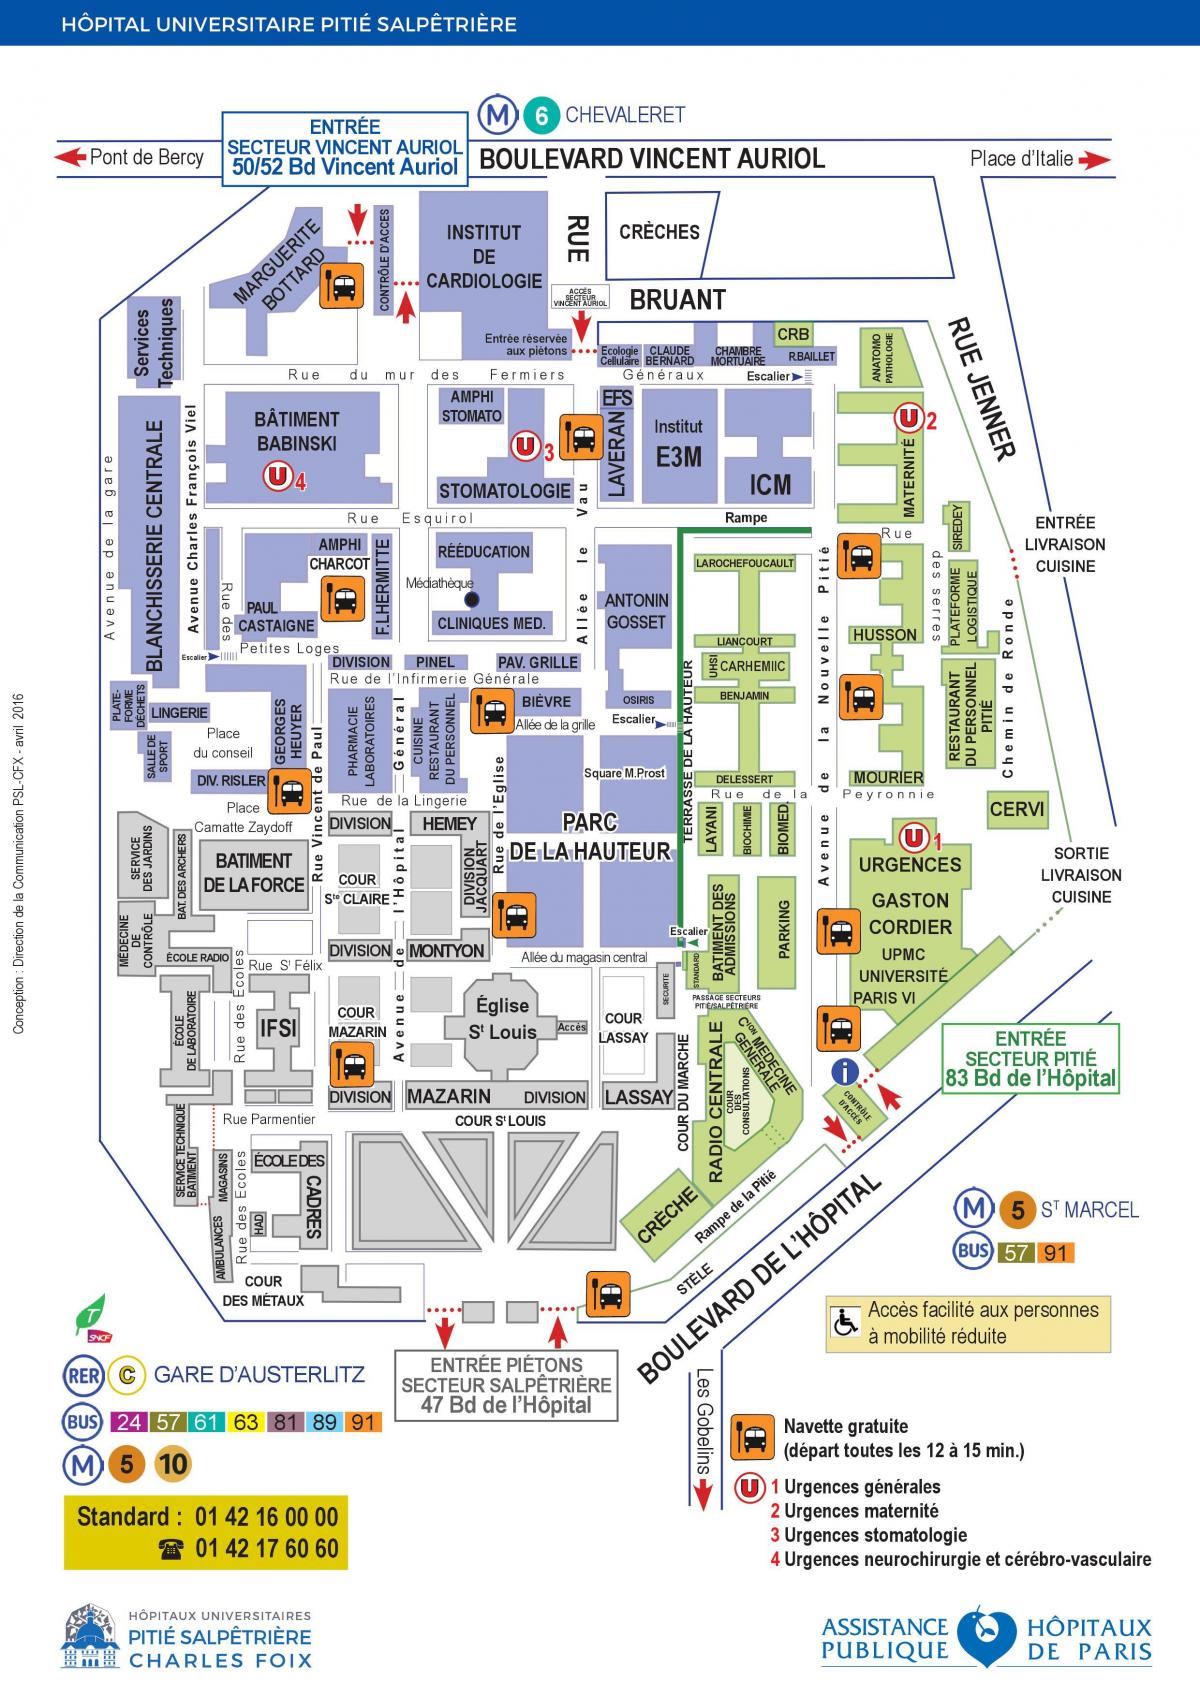 Kaart van Pitie Salpetriere hospitaal